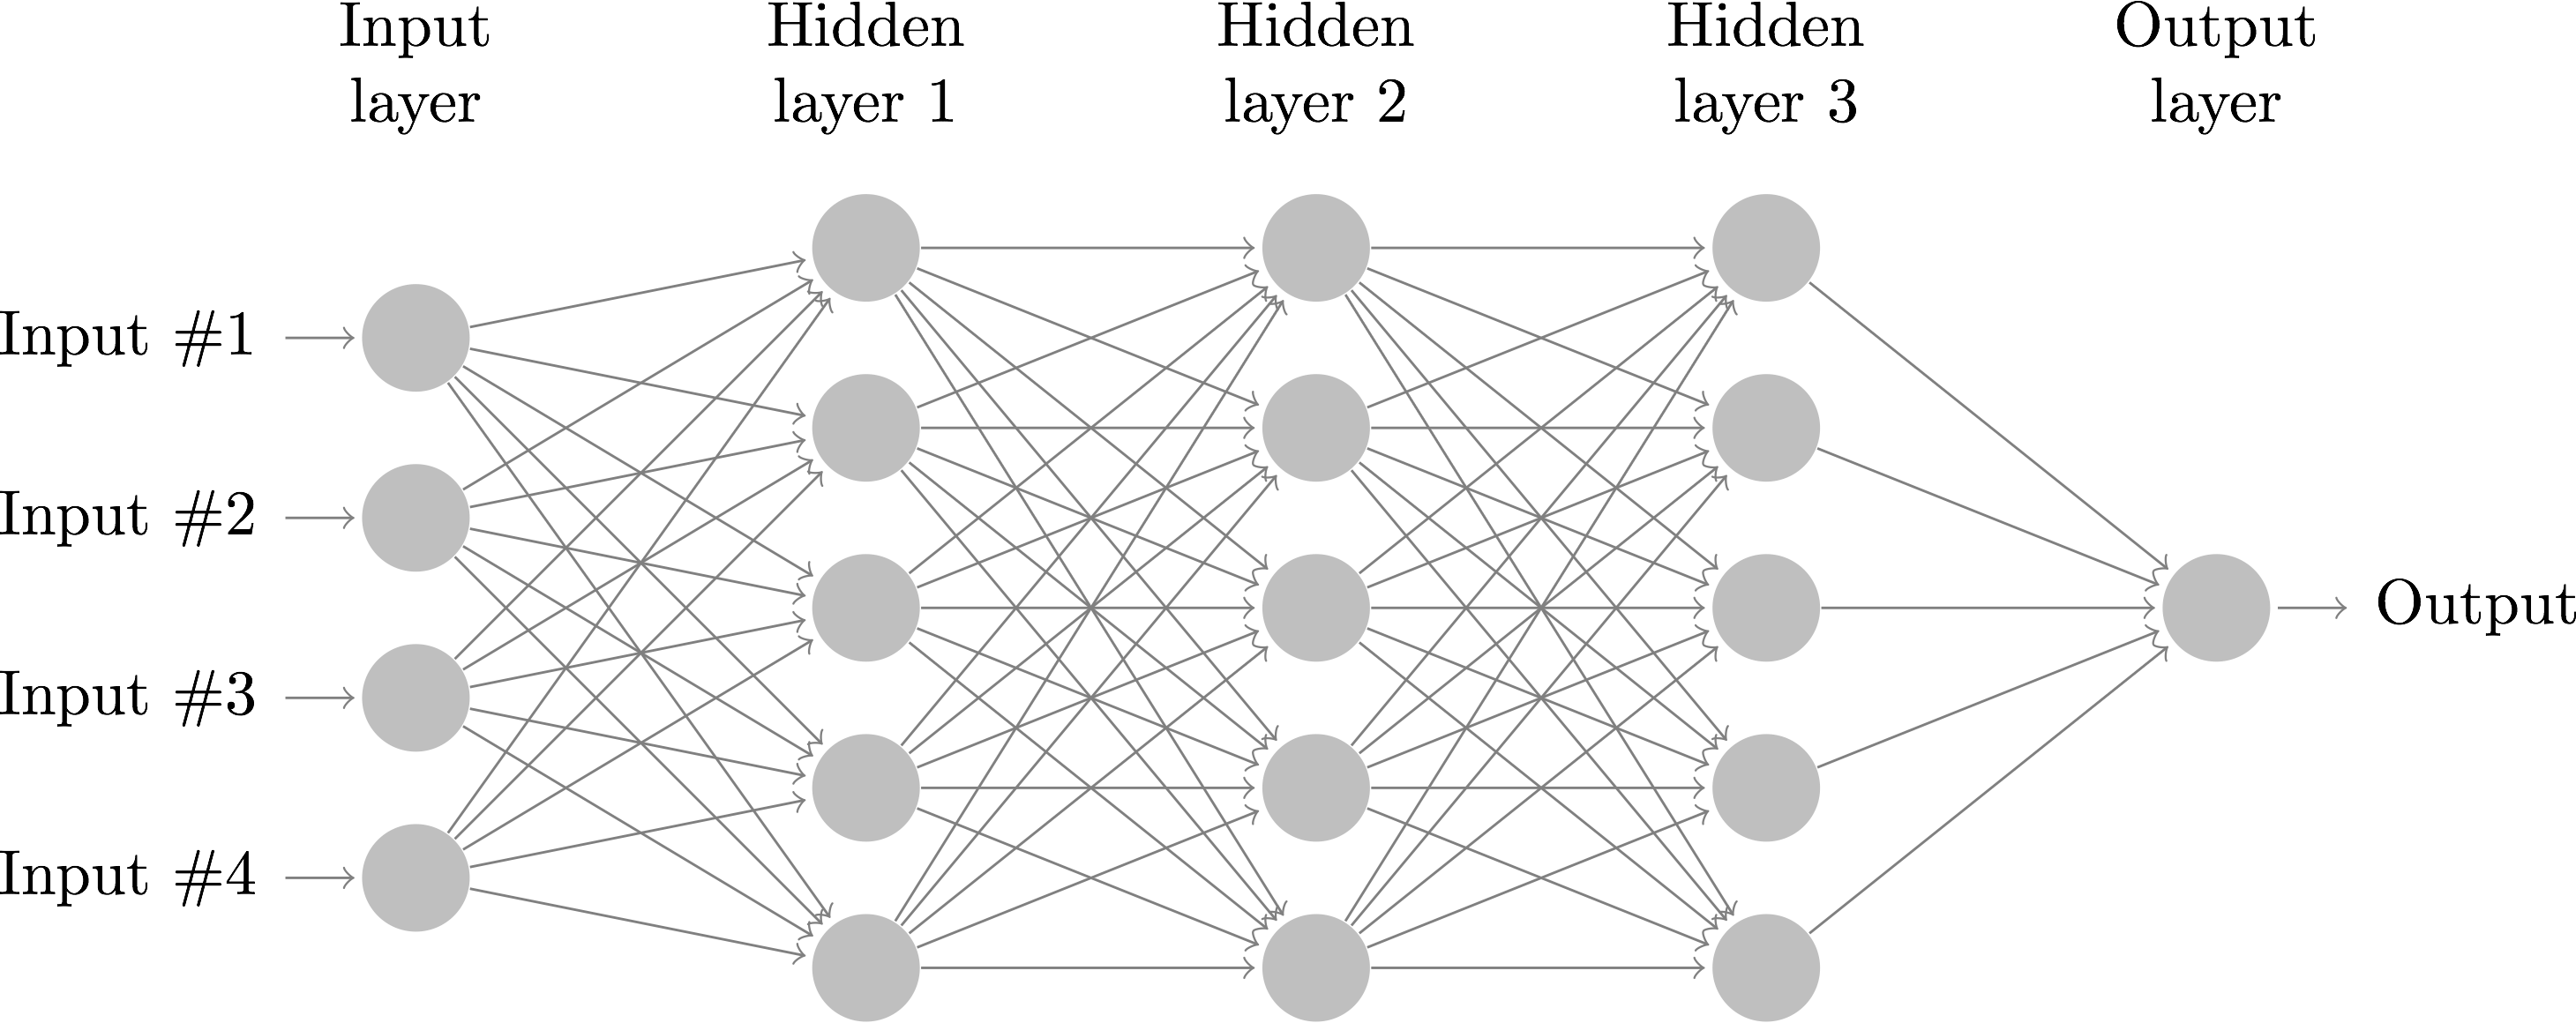 4-layer neural network